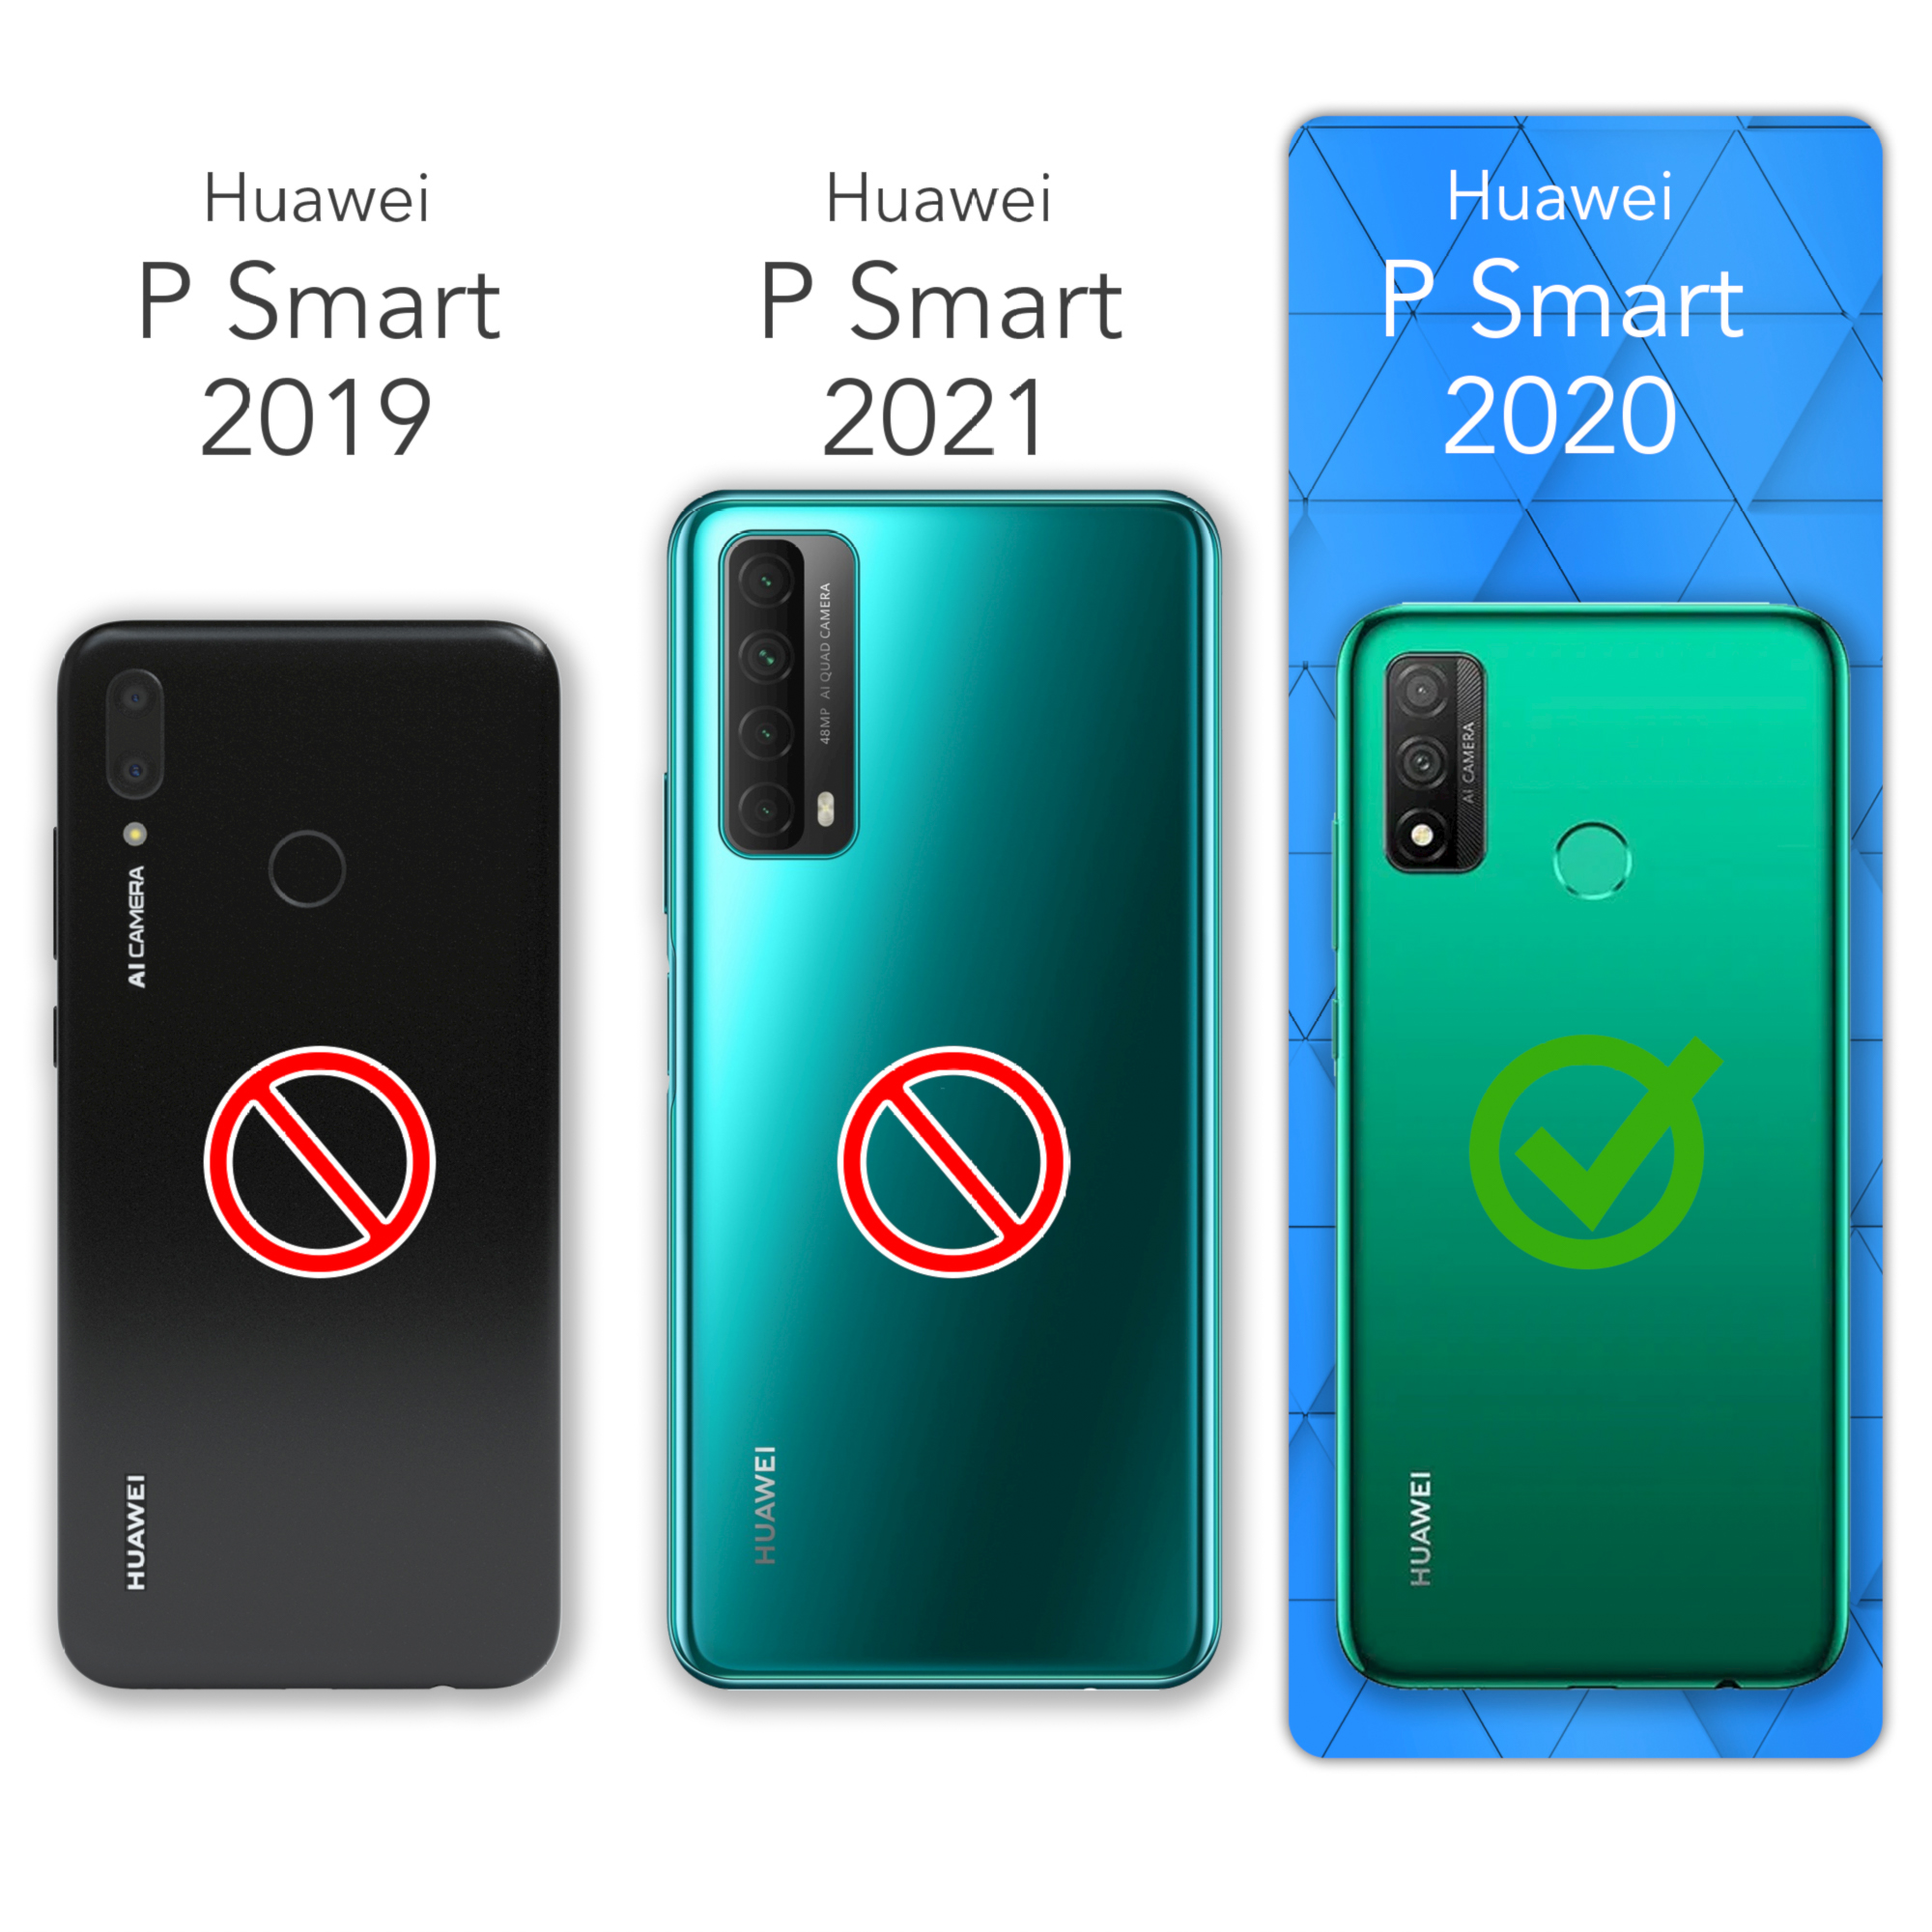 EAZY CASE Smart Backcover, Premium Handycase, Rot (2020), Silikon Huawei, P